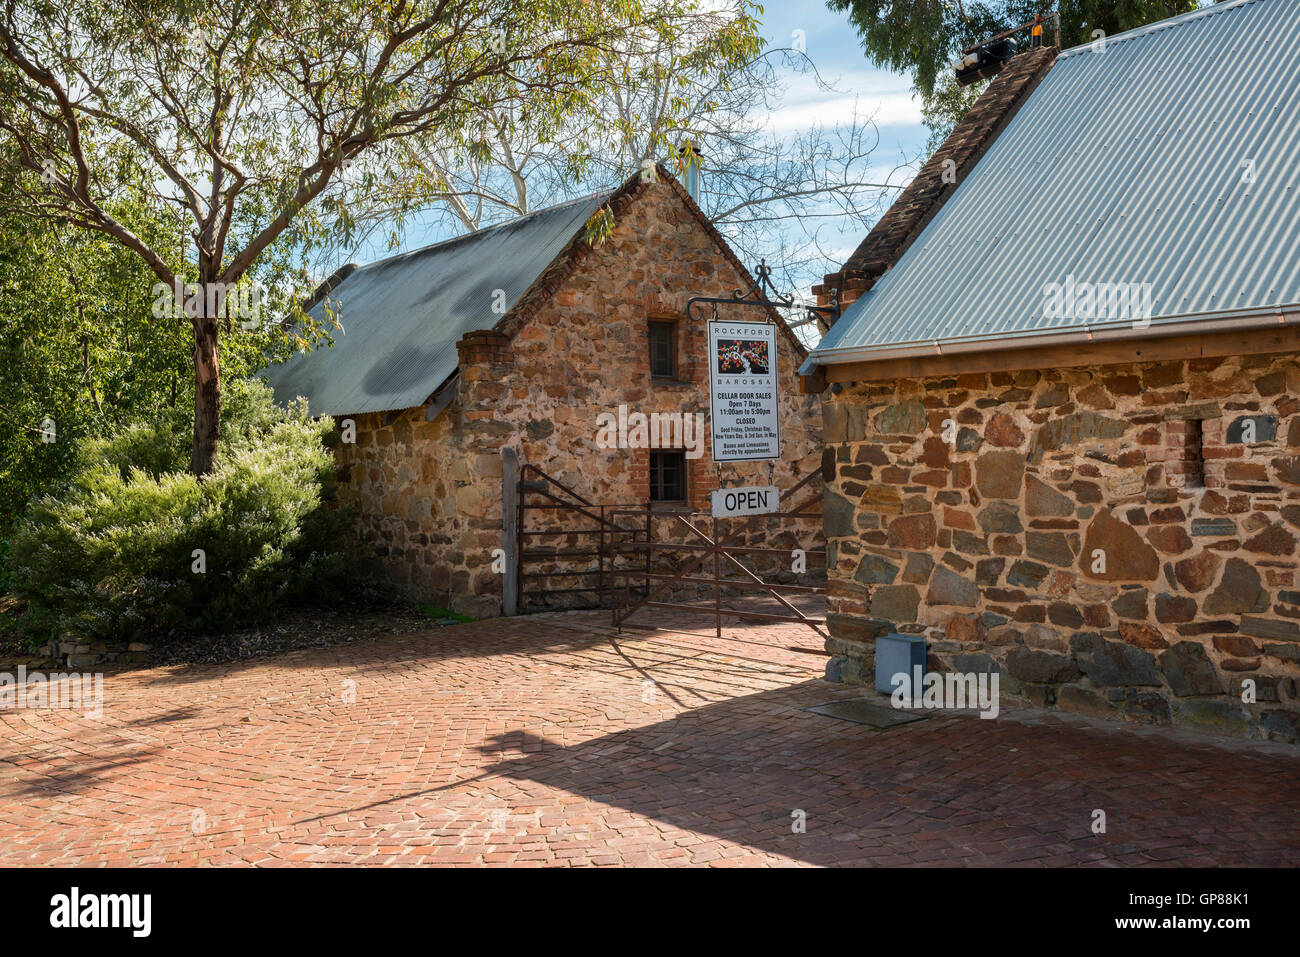 Das historische Rockfords Weingut Keller Tür Verkaufsgebiet in South Australia Barossa Valley. Stockfoto